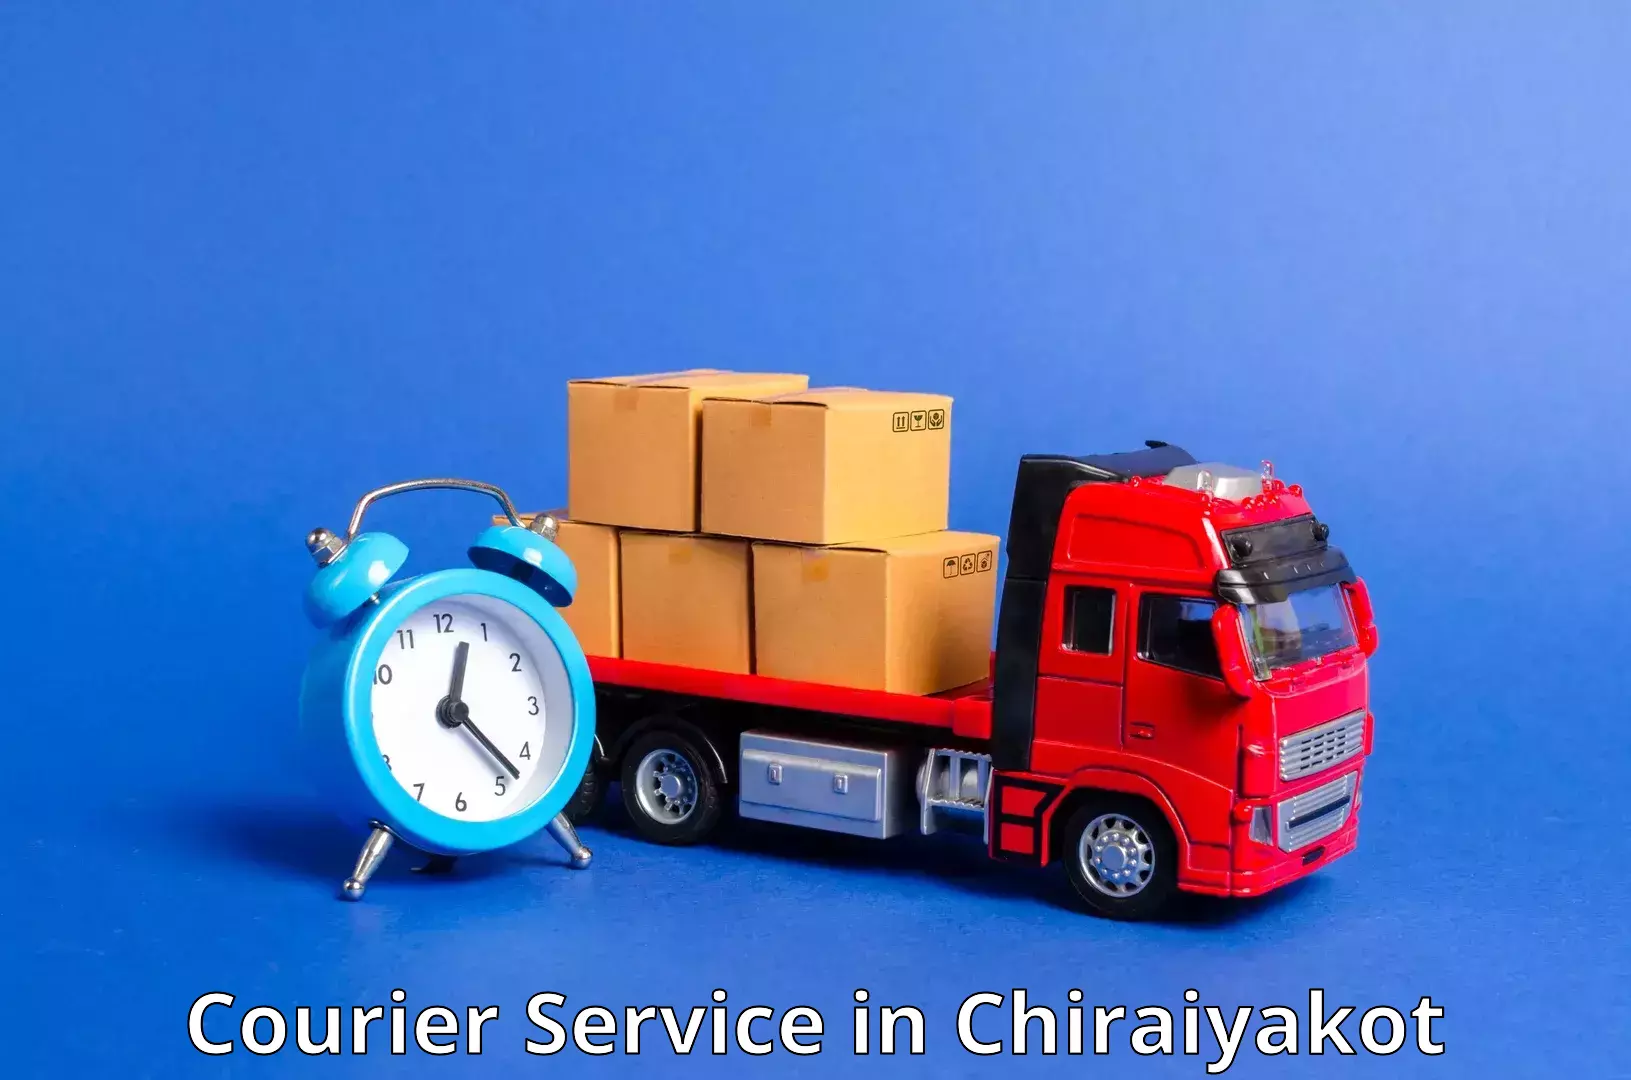 Efficient package consolidation in Chiraiyakot